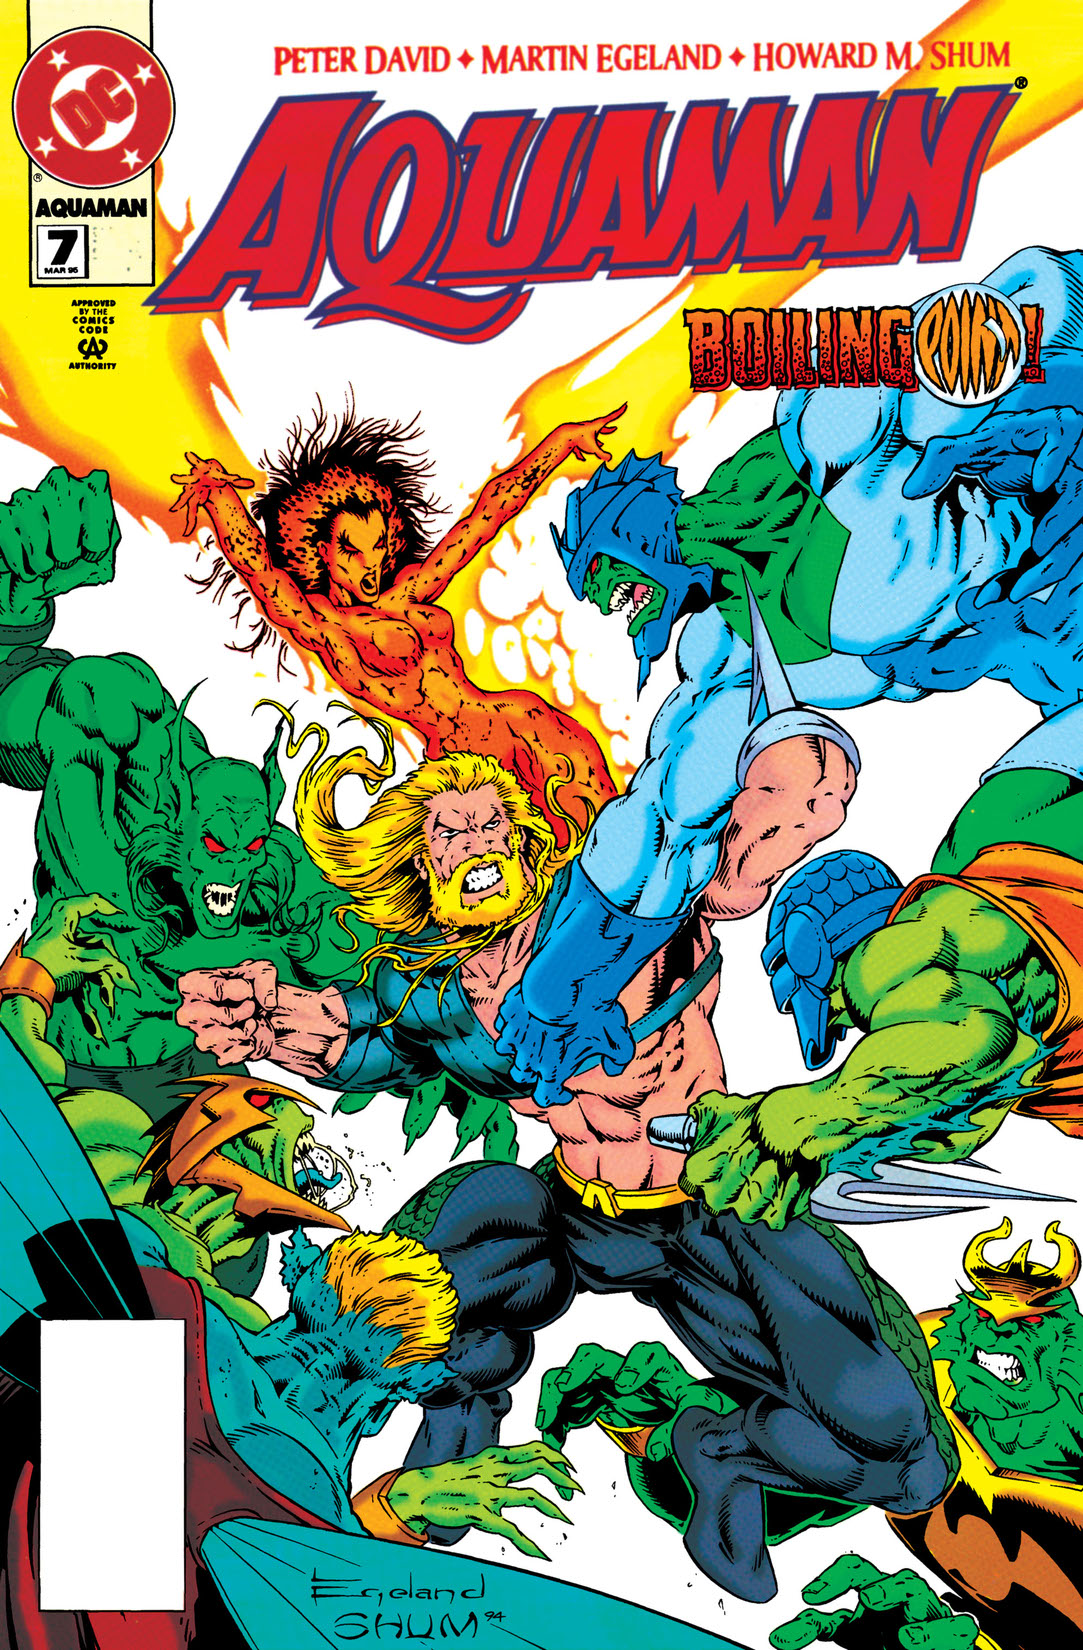 Aquaman (1994-) #7 preview images